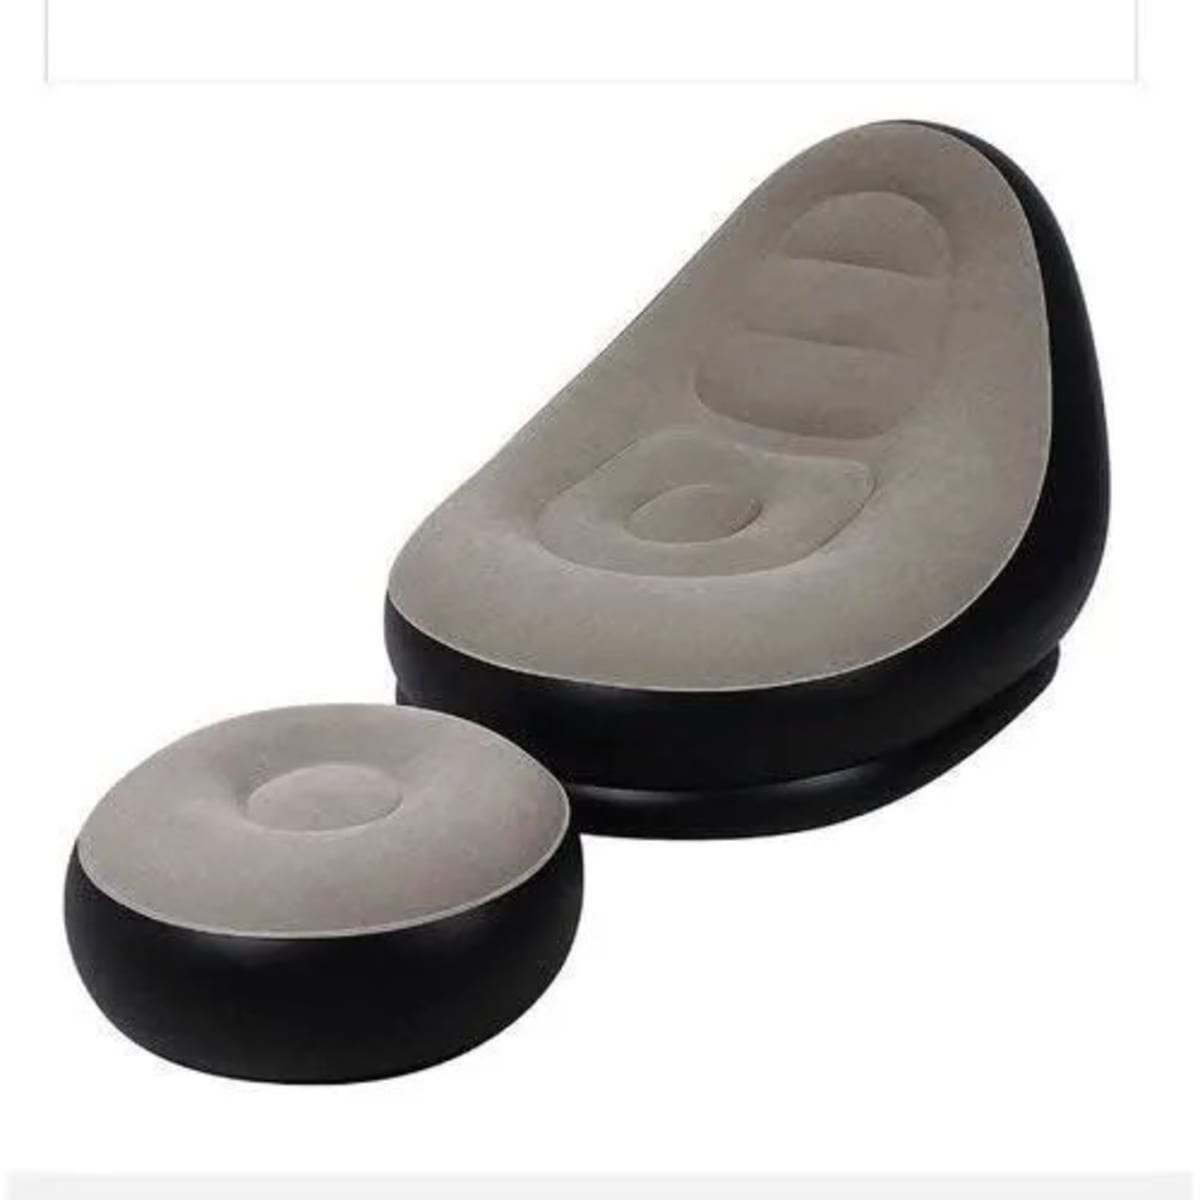 Intex Inflatable Relaxing Air Sofa